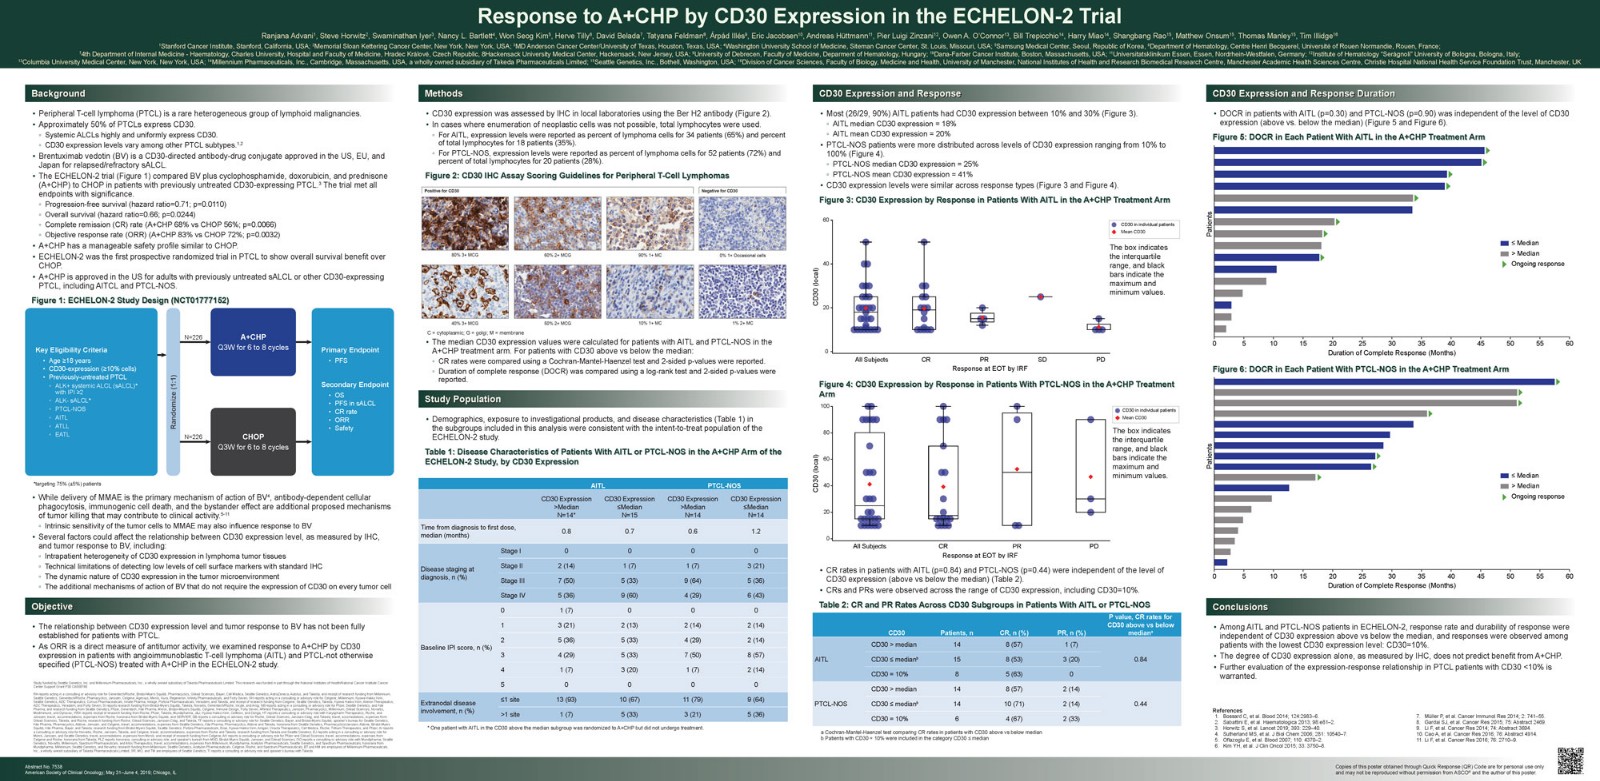 ASCO 2019：Brentuximab vedotin治疗<font color="red">淋巴瘤</font>优势显著，不依赖CD30表达